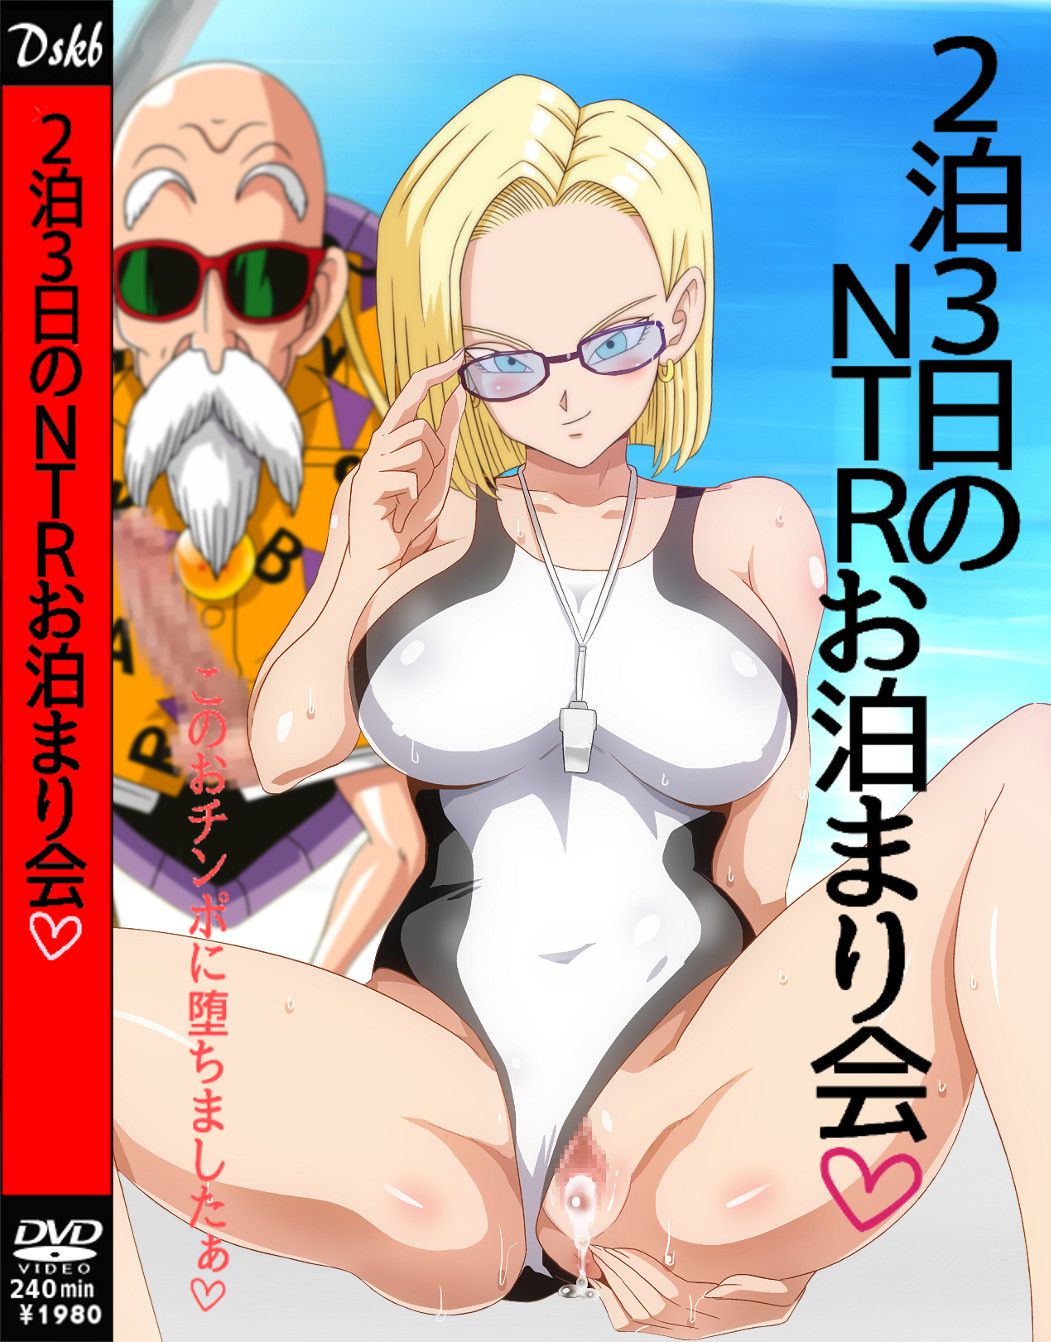 [AV Pakekora] Anime character that has been on the cover of the magazine and AV package 36 8